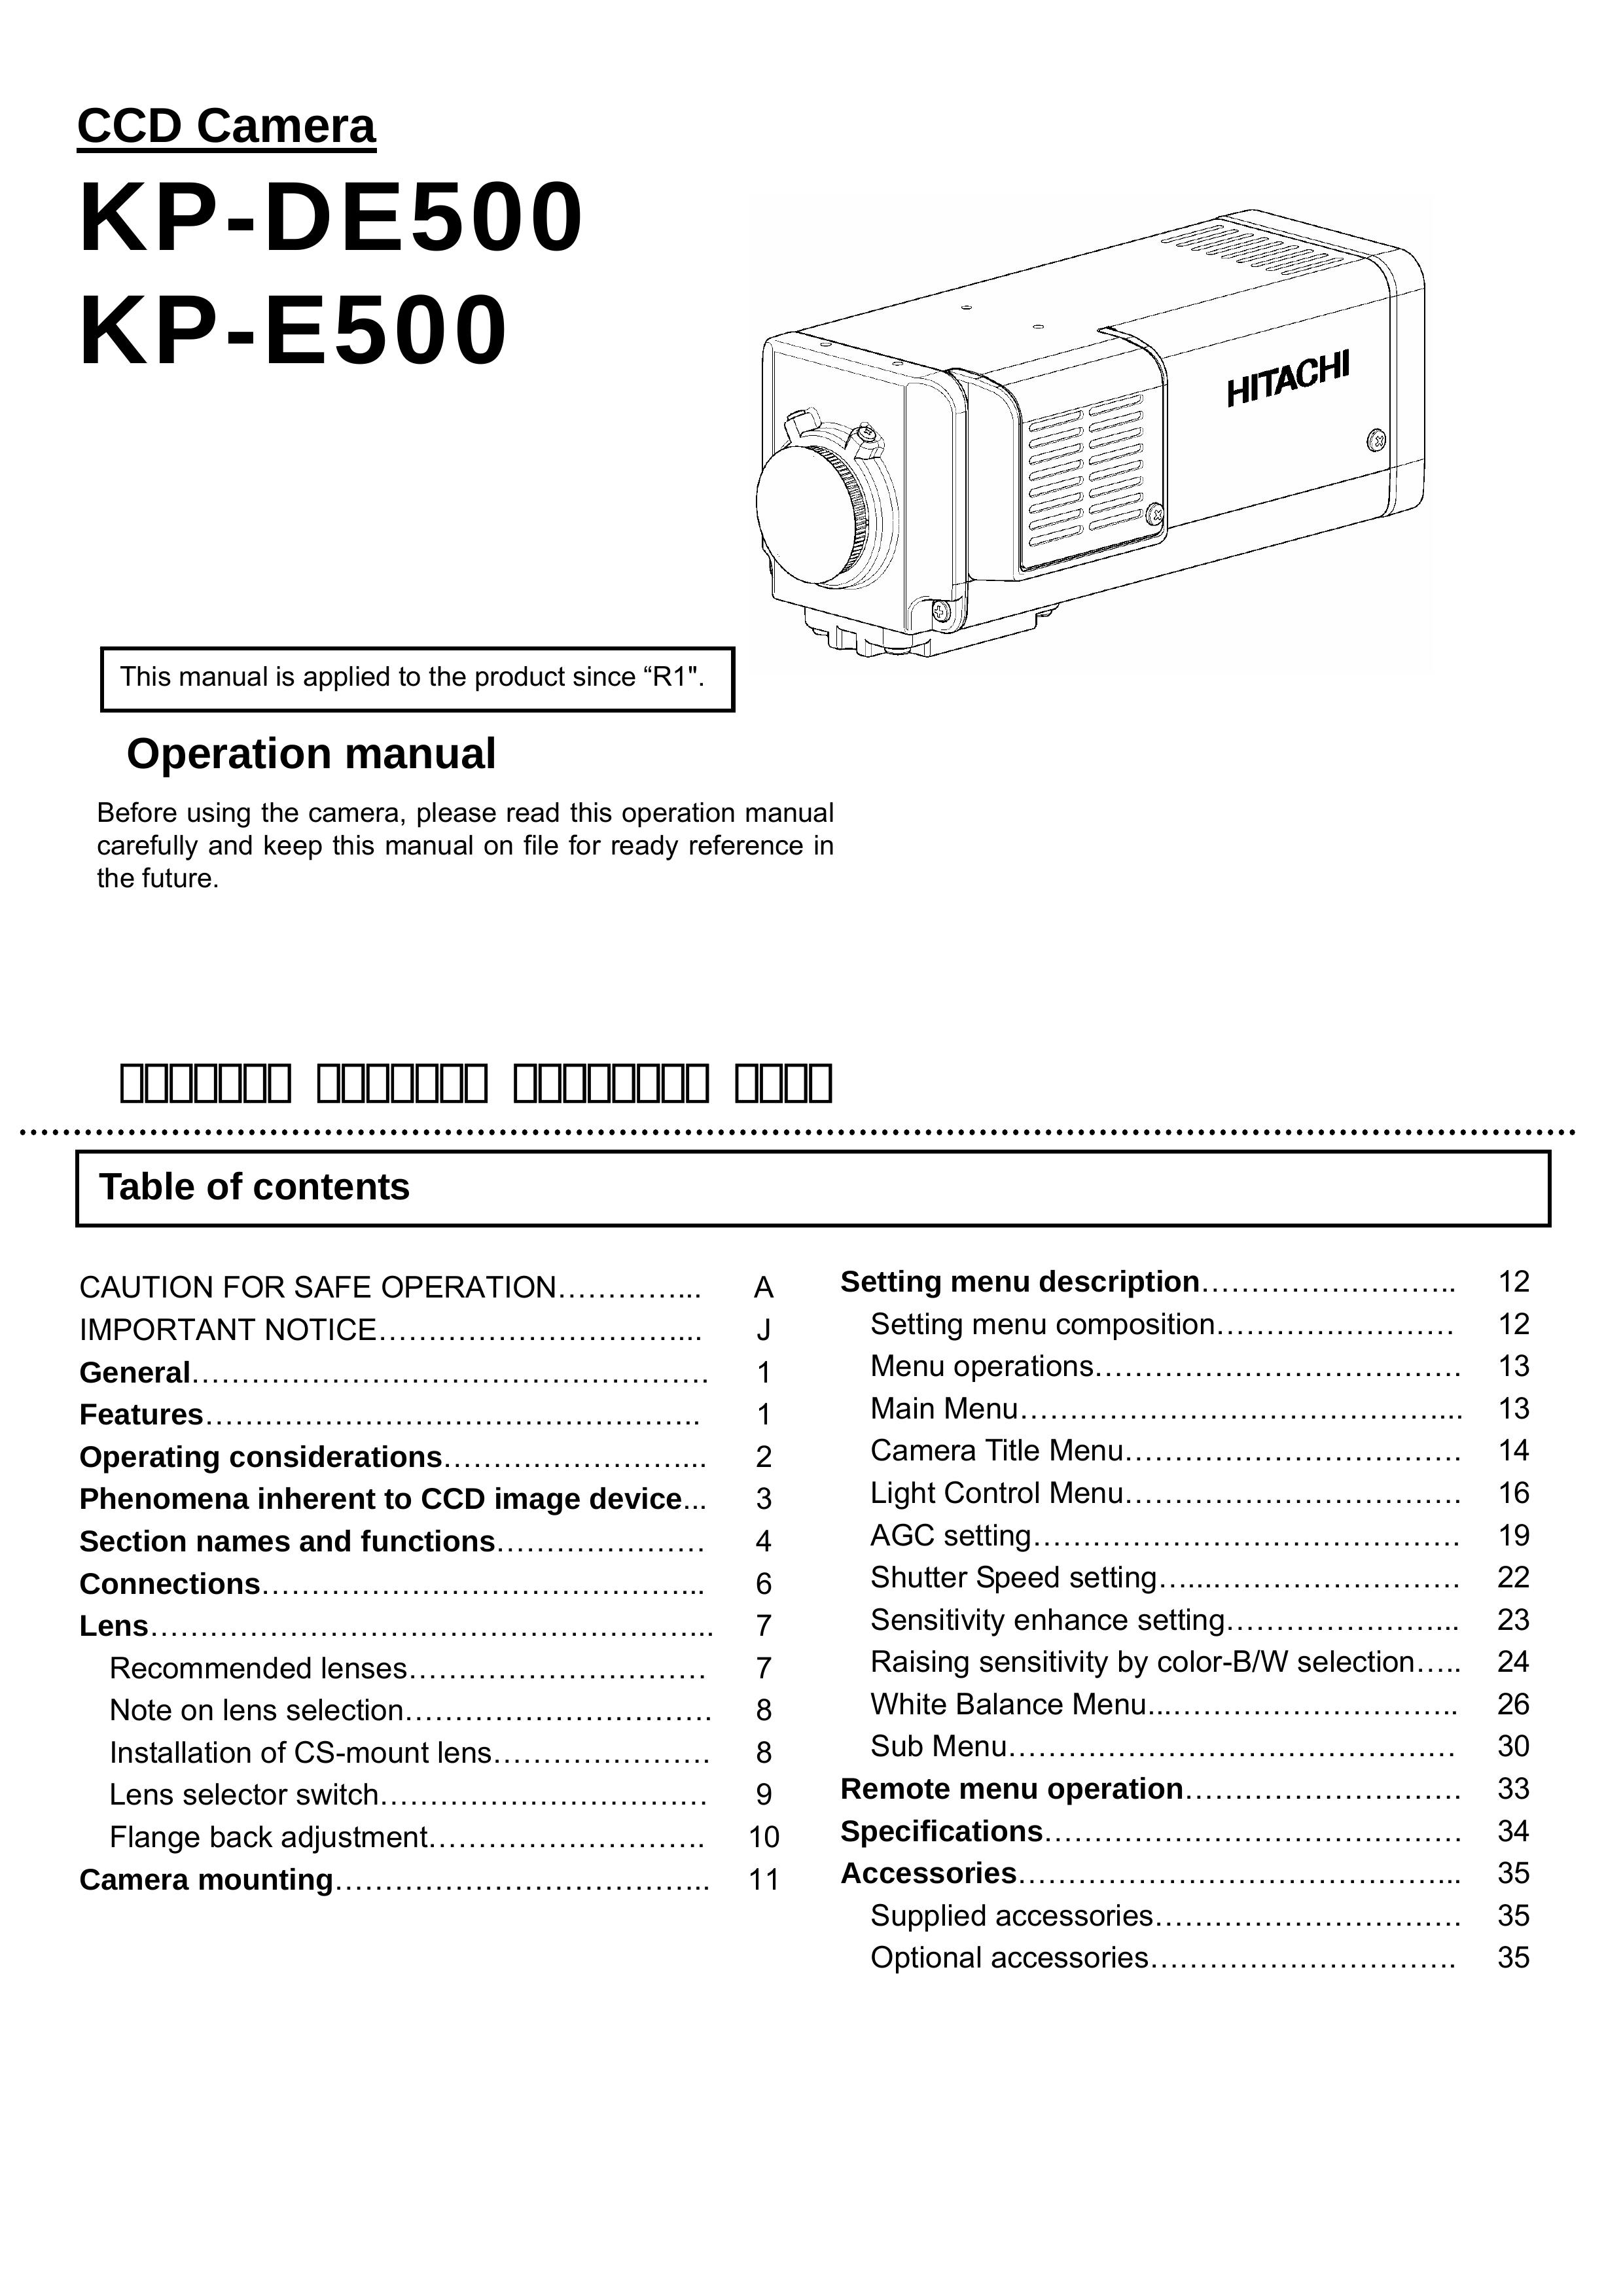 Hitachi KP-DE500 Digital Camera User Manual